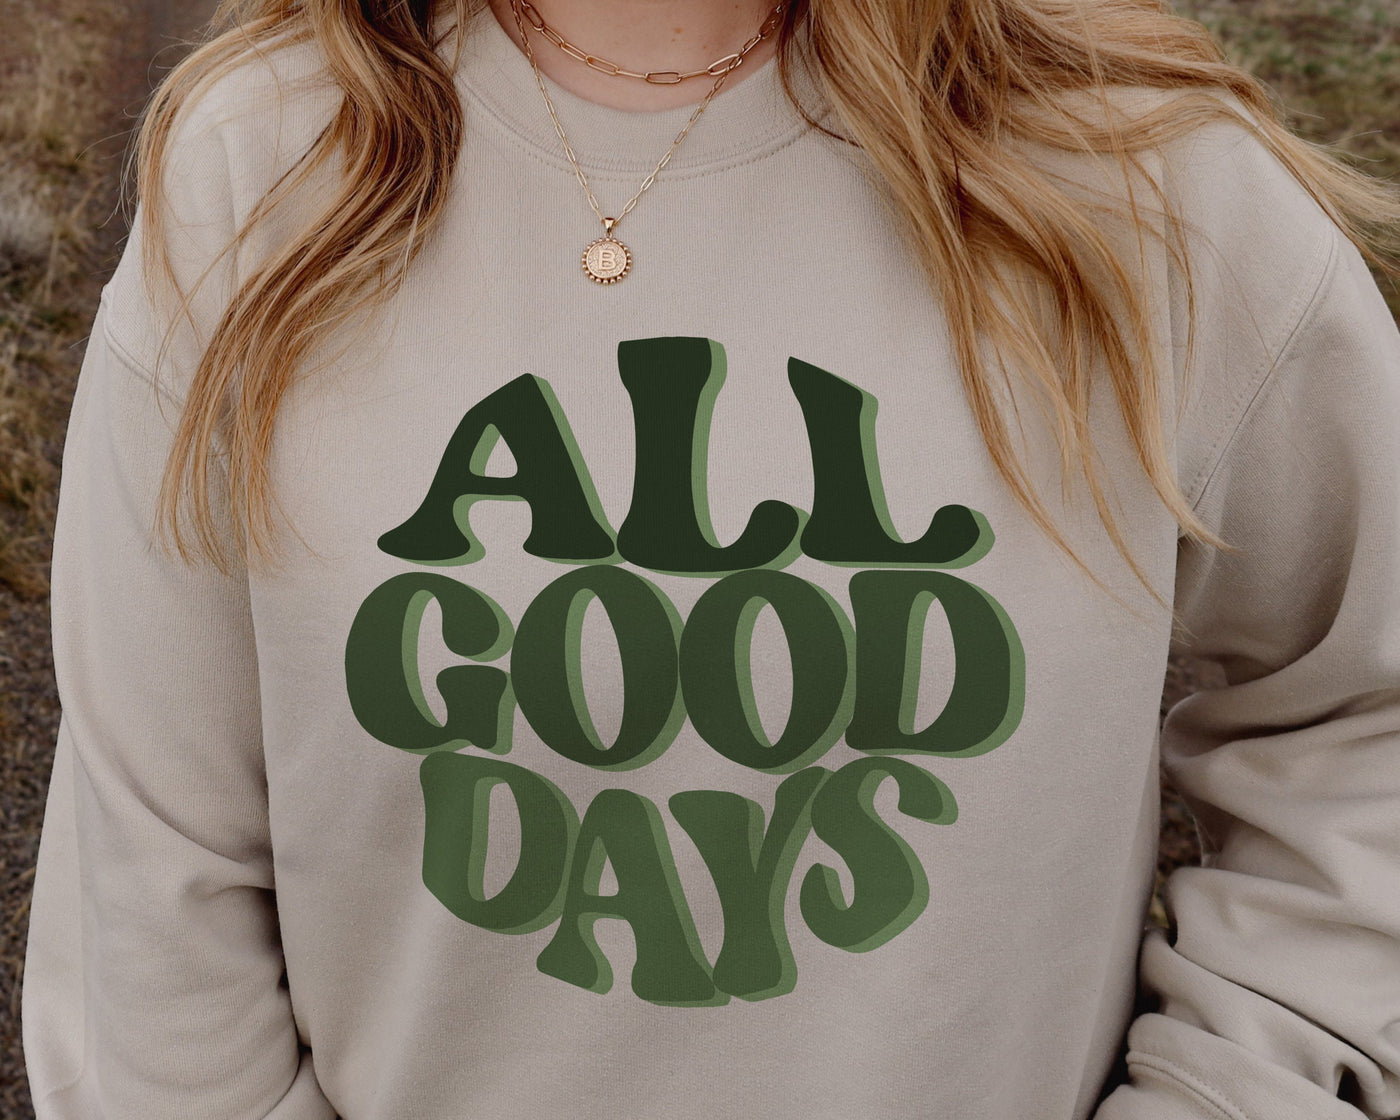 Retro Crewneck, Boho Crewneck Sweatshirt, Good Vibes Gift, Cute Hippie Sweatshirt, All Good Days, Cute Crewneck Sweatshirt, Minimalist Shirt